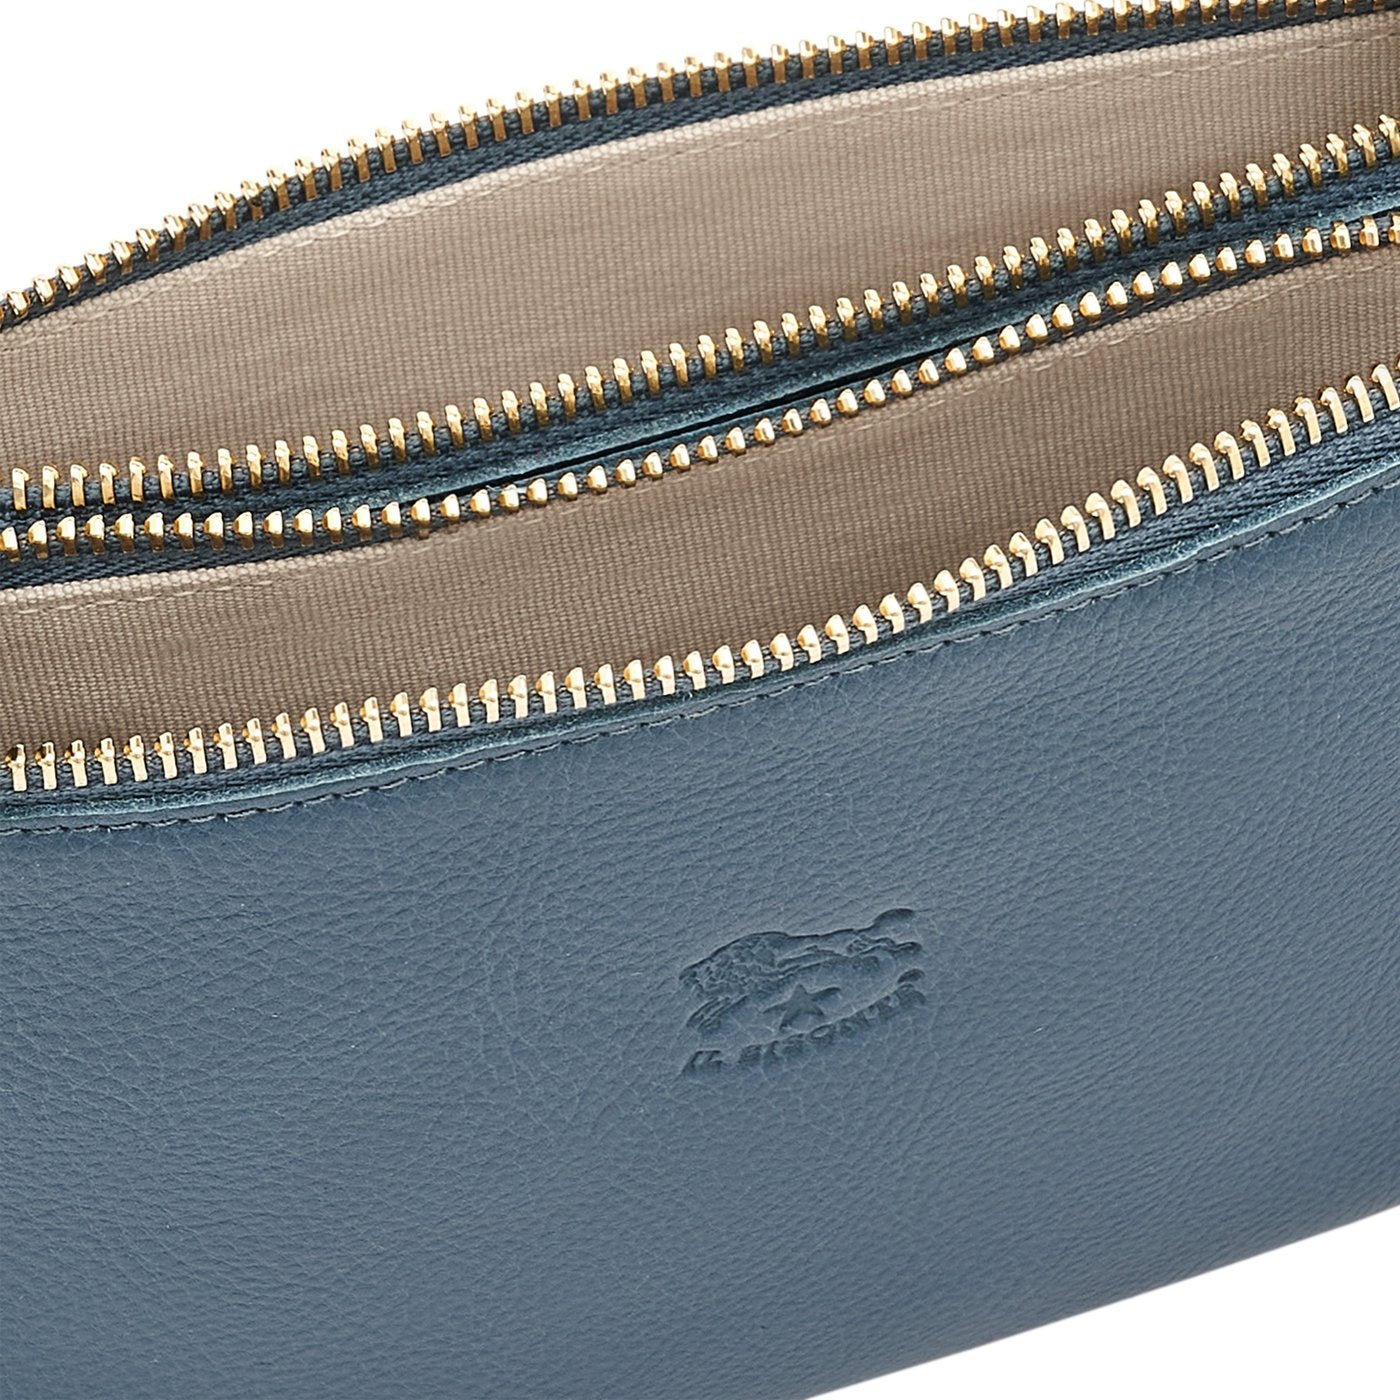 Talamone | Women's clutch bag in leather color blue denim